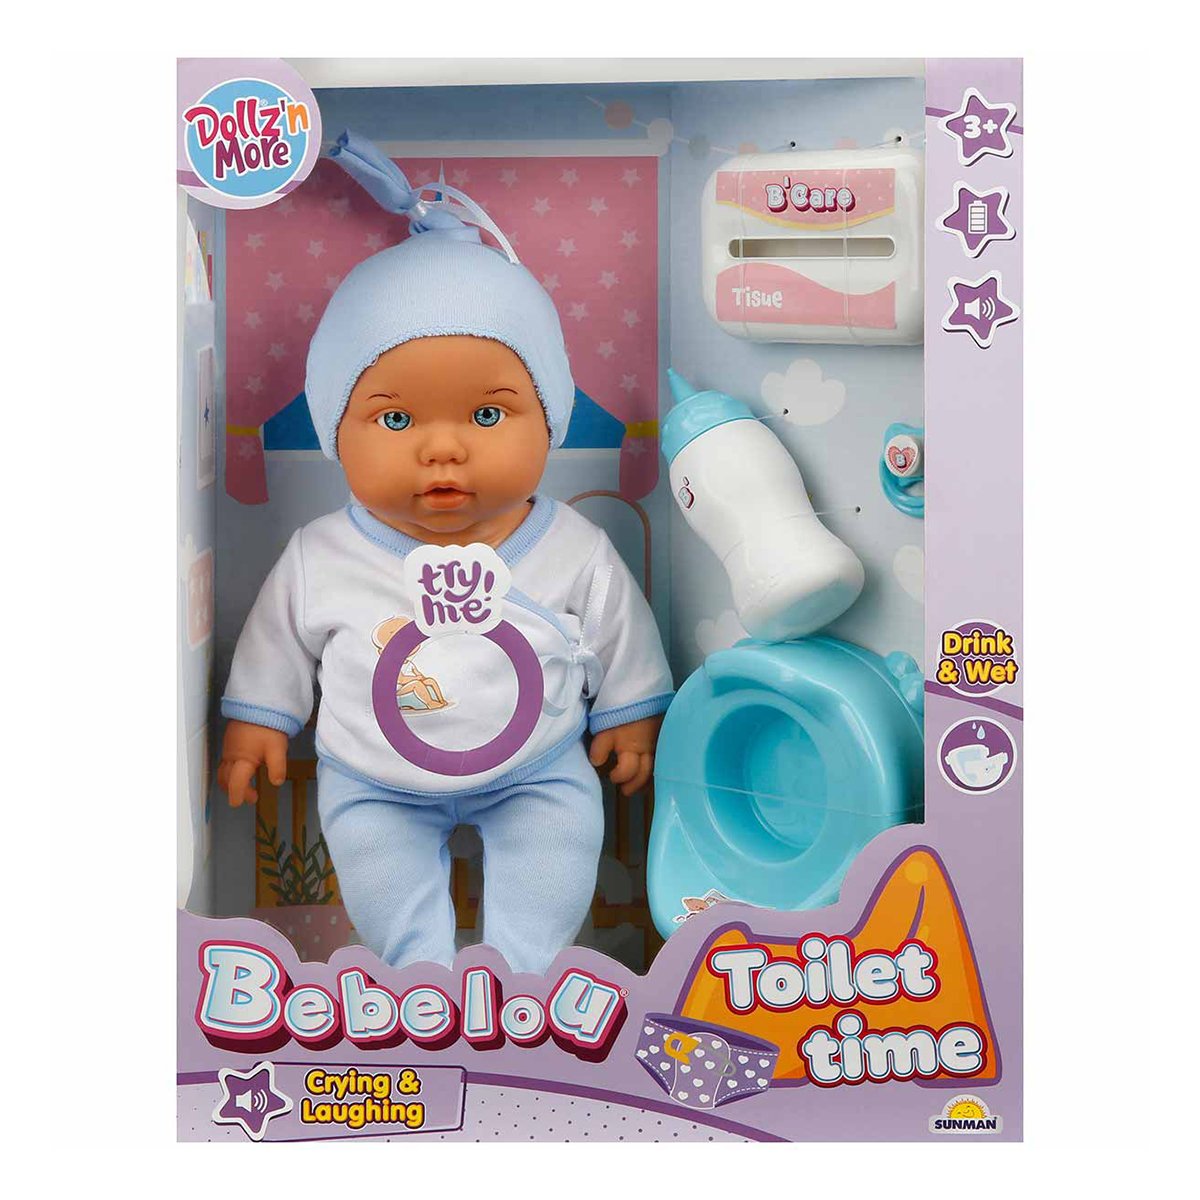 Papusa bebelus Bebelou, Dollzn More, Toilet Time, 35 cm, albastru